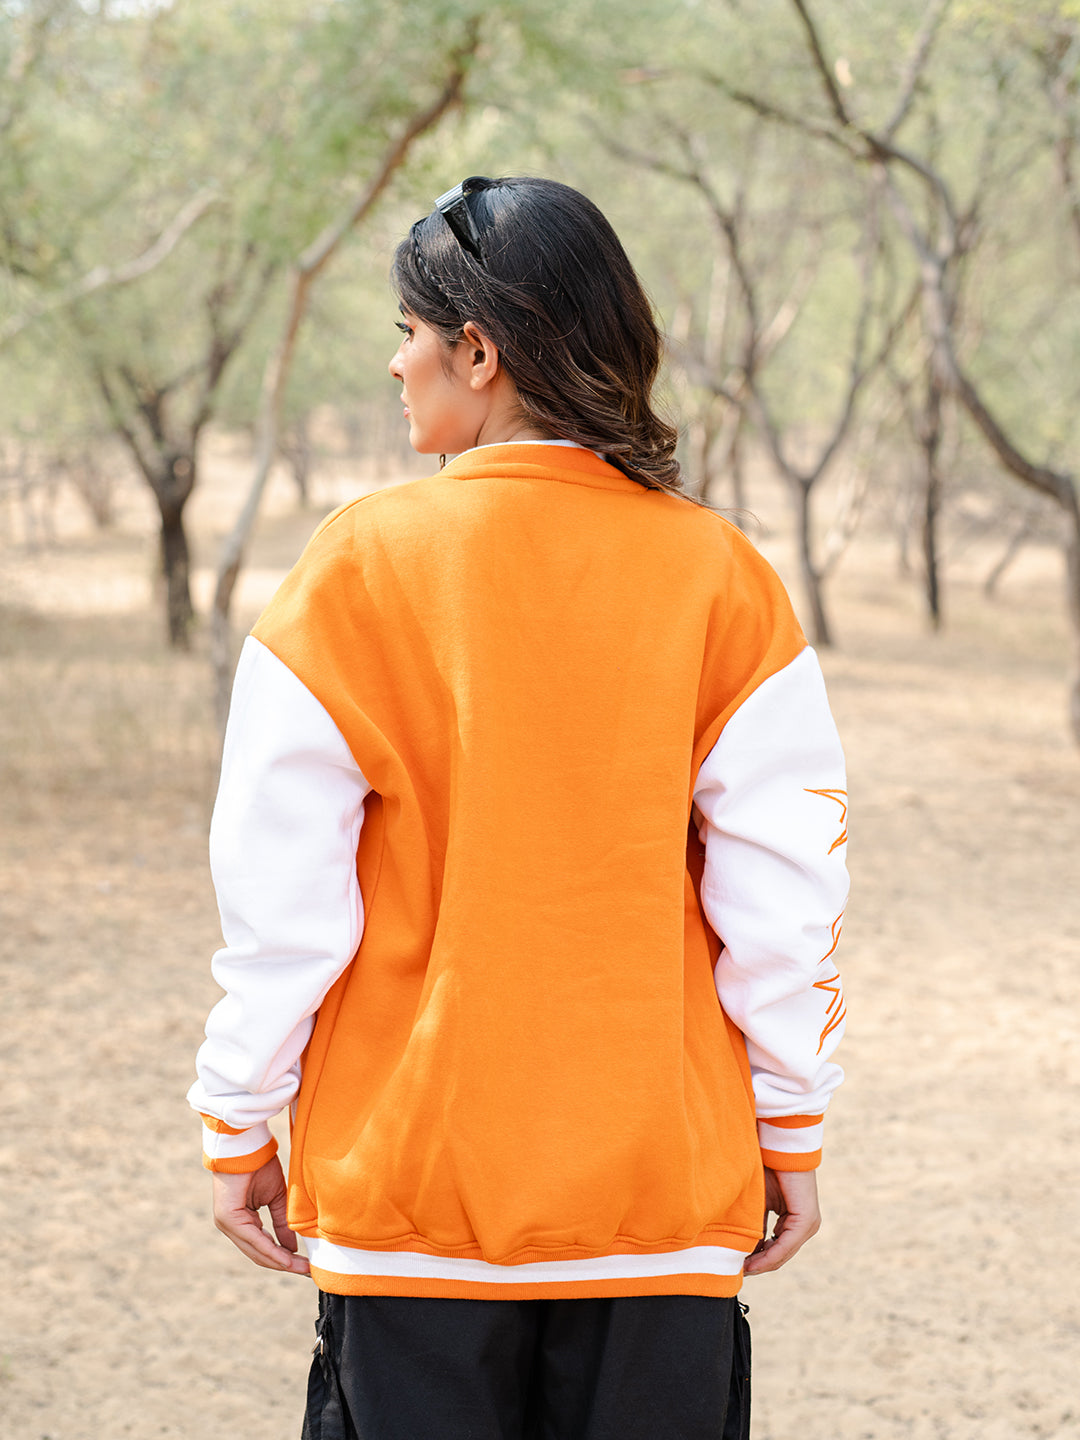 Explore in Style with Arrak Outdoor USA's Burnt Orange Hybrid Lady Jacket